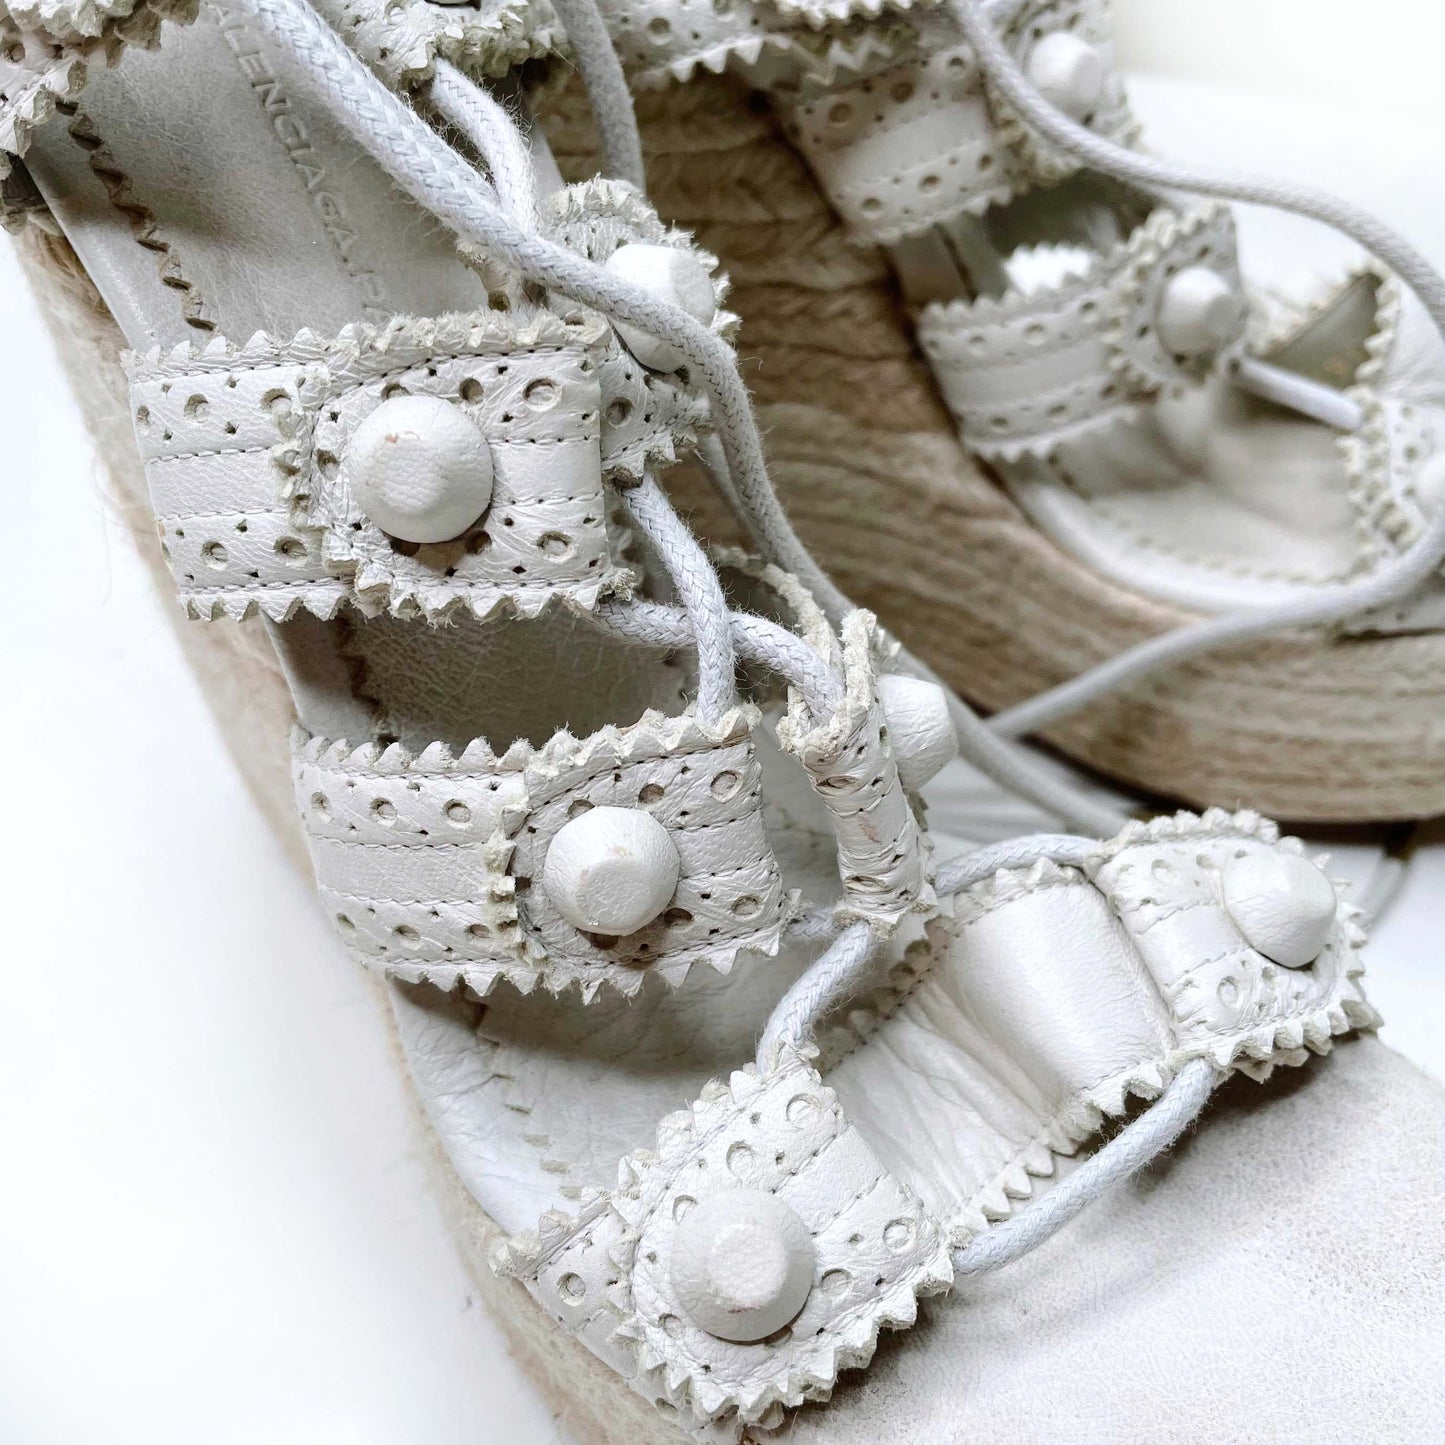 balenciaga white leather strappy wedge espadrilles sandals - size 38